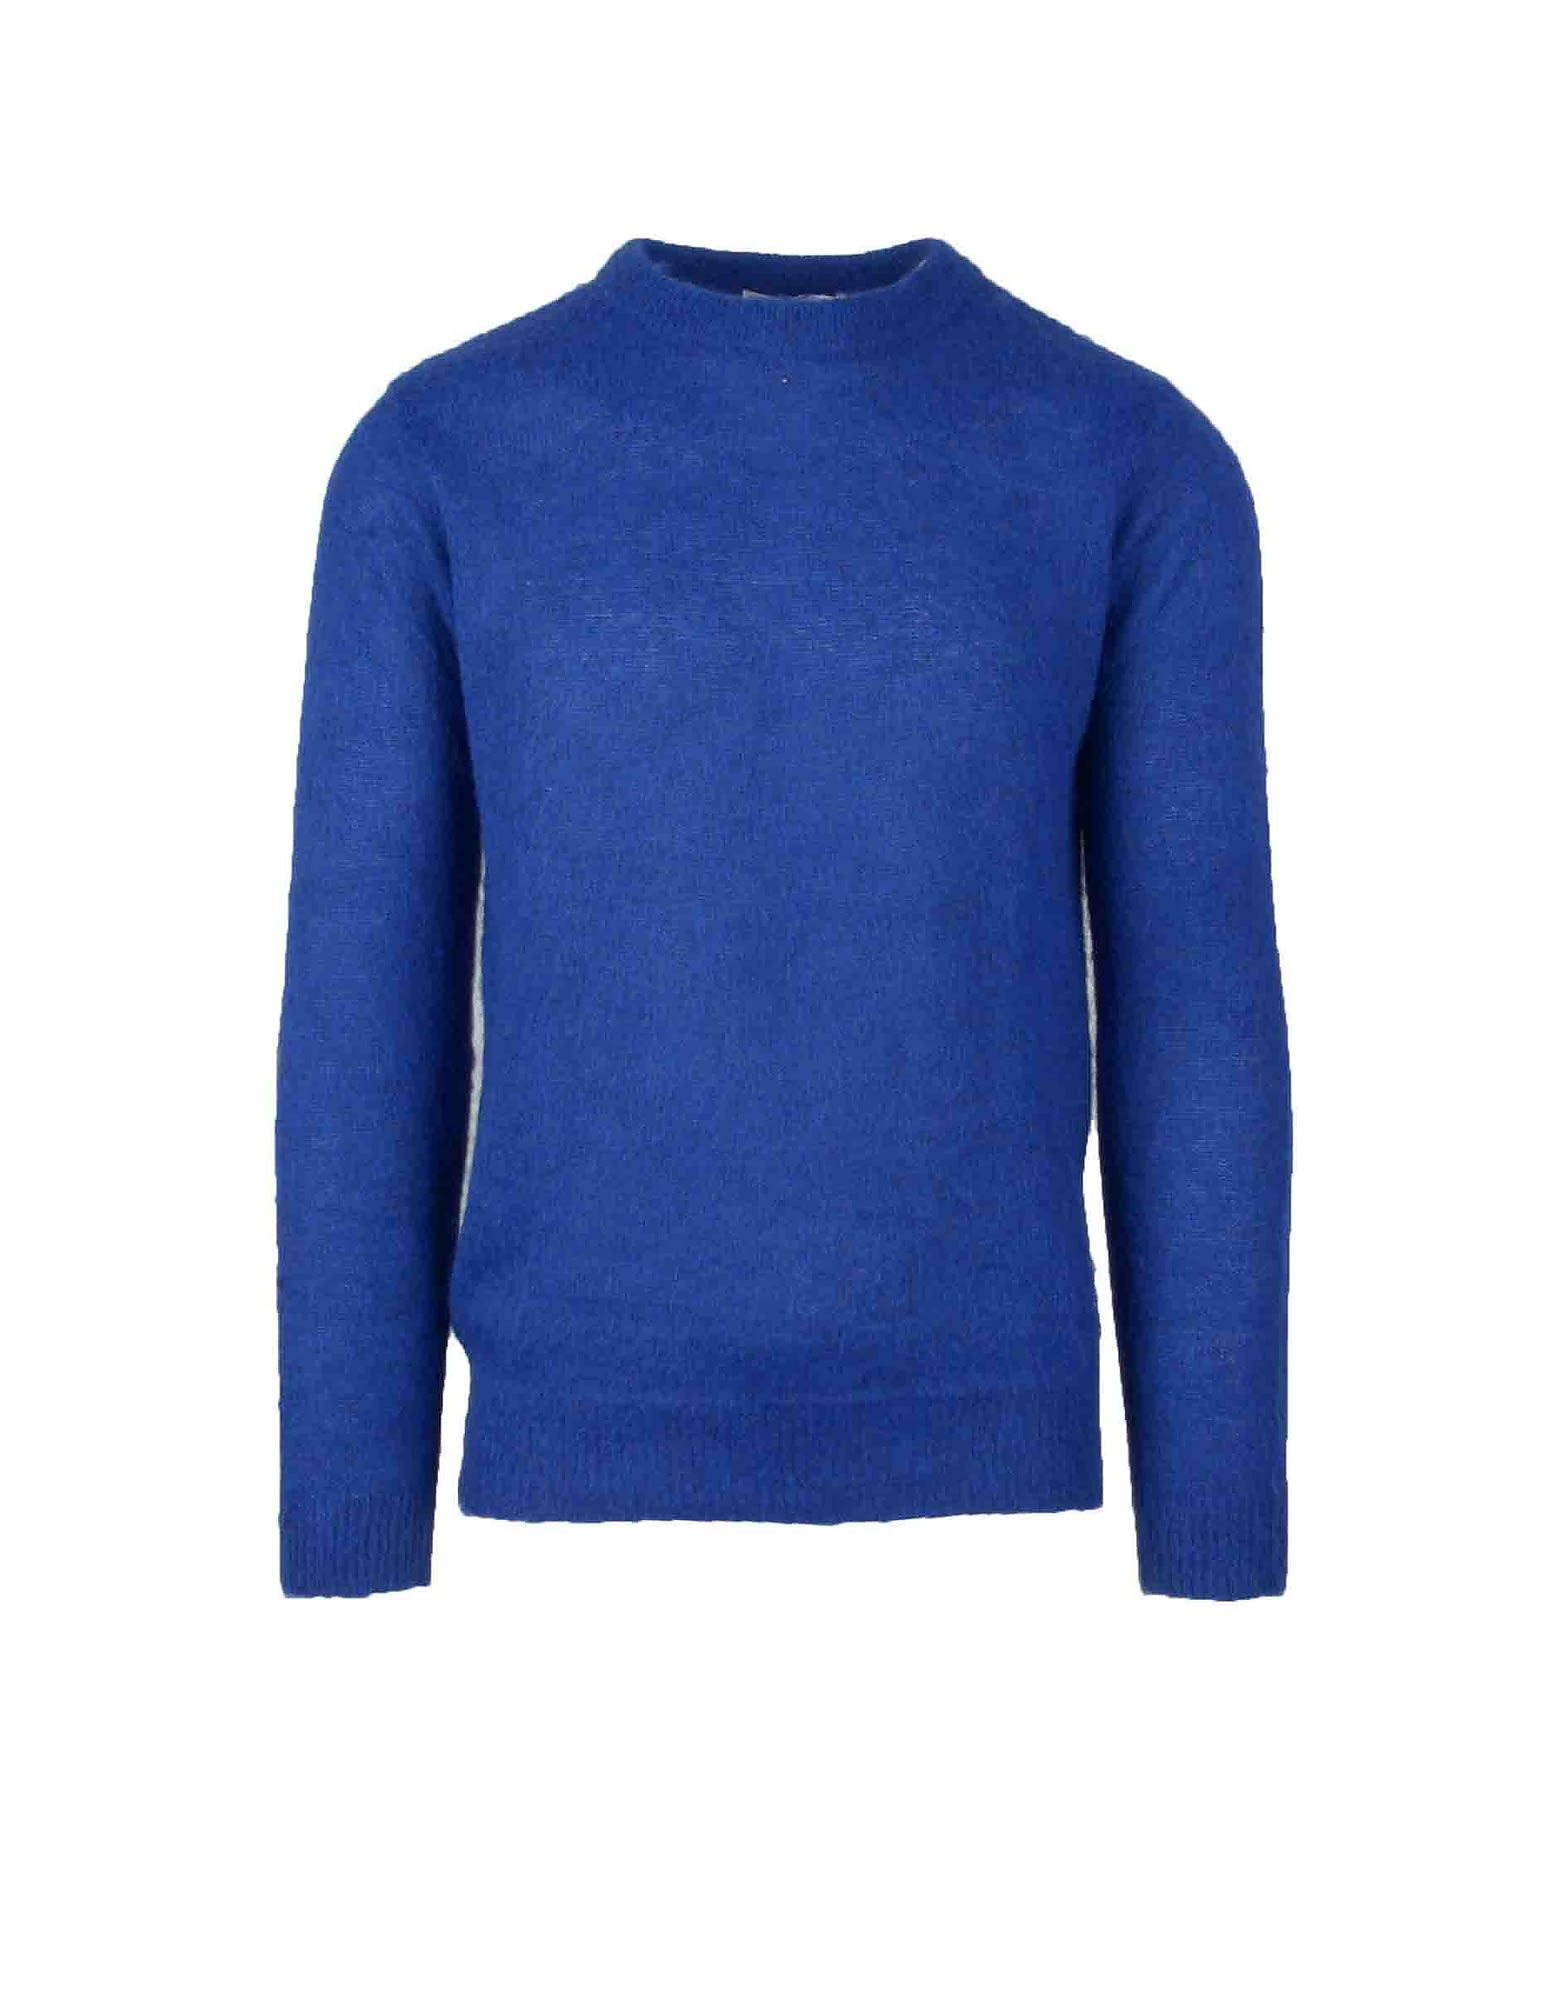 Daniele Alessandrini Mens Bluette Sweater